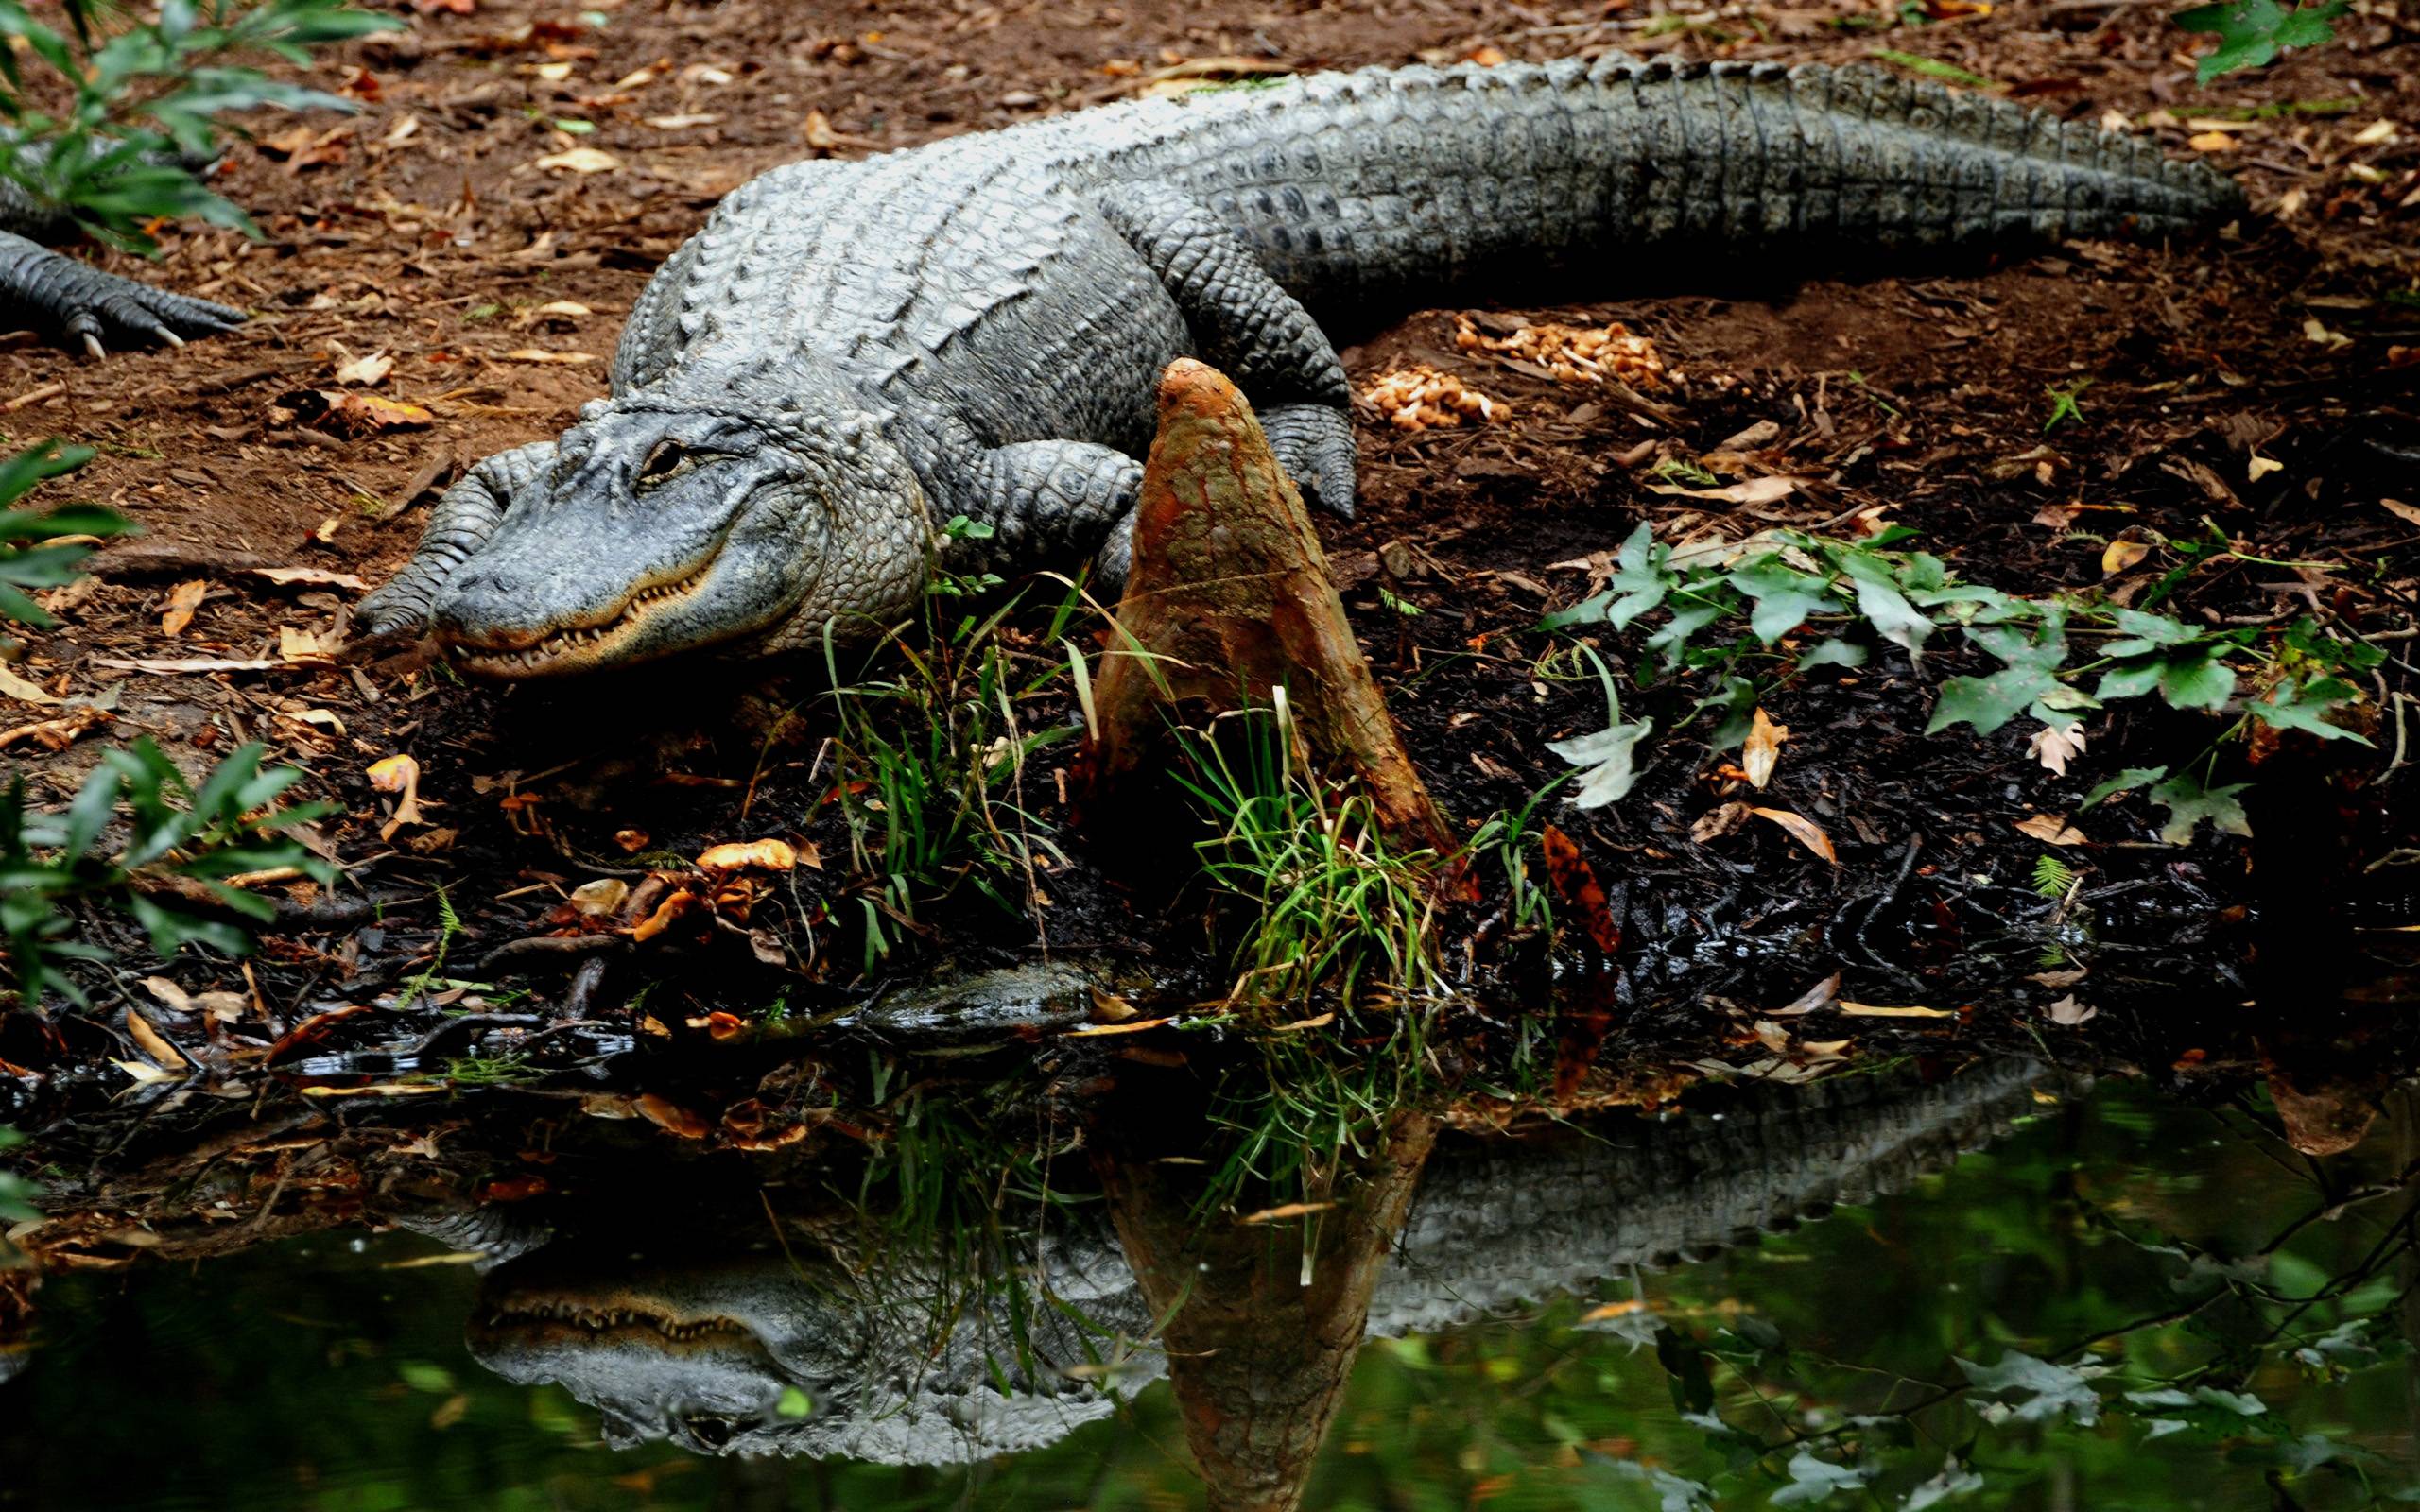 Crocodile HD Wallpaper. Crocodile Desktop Image